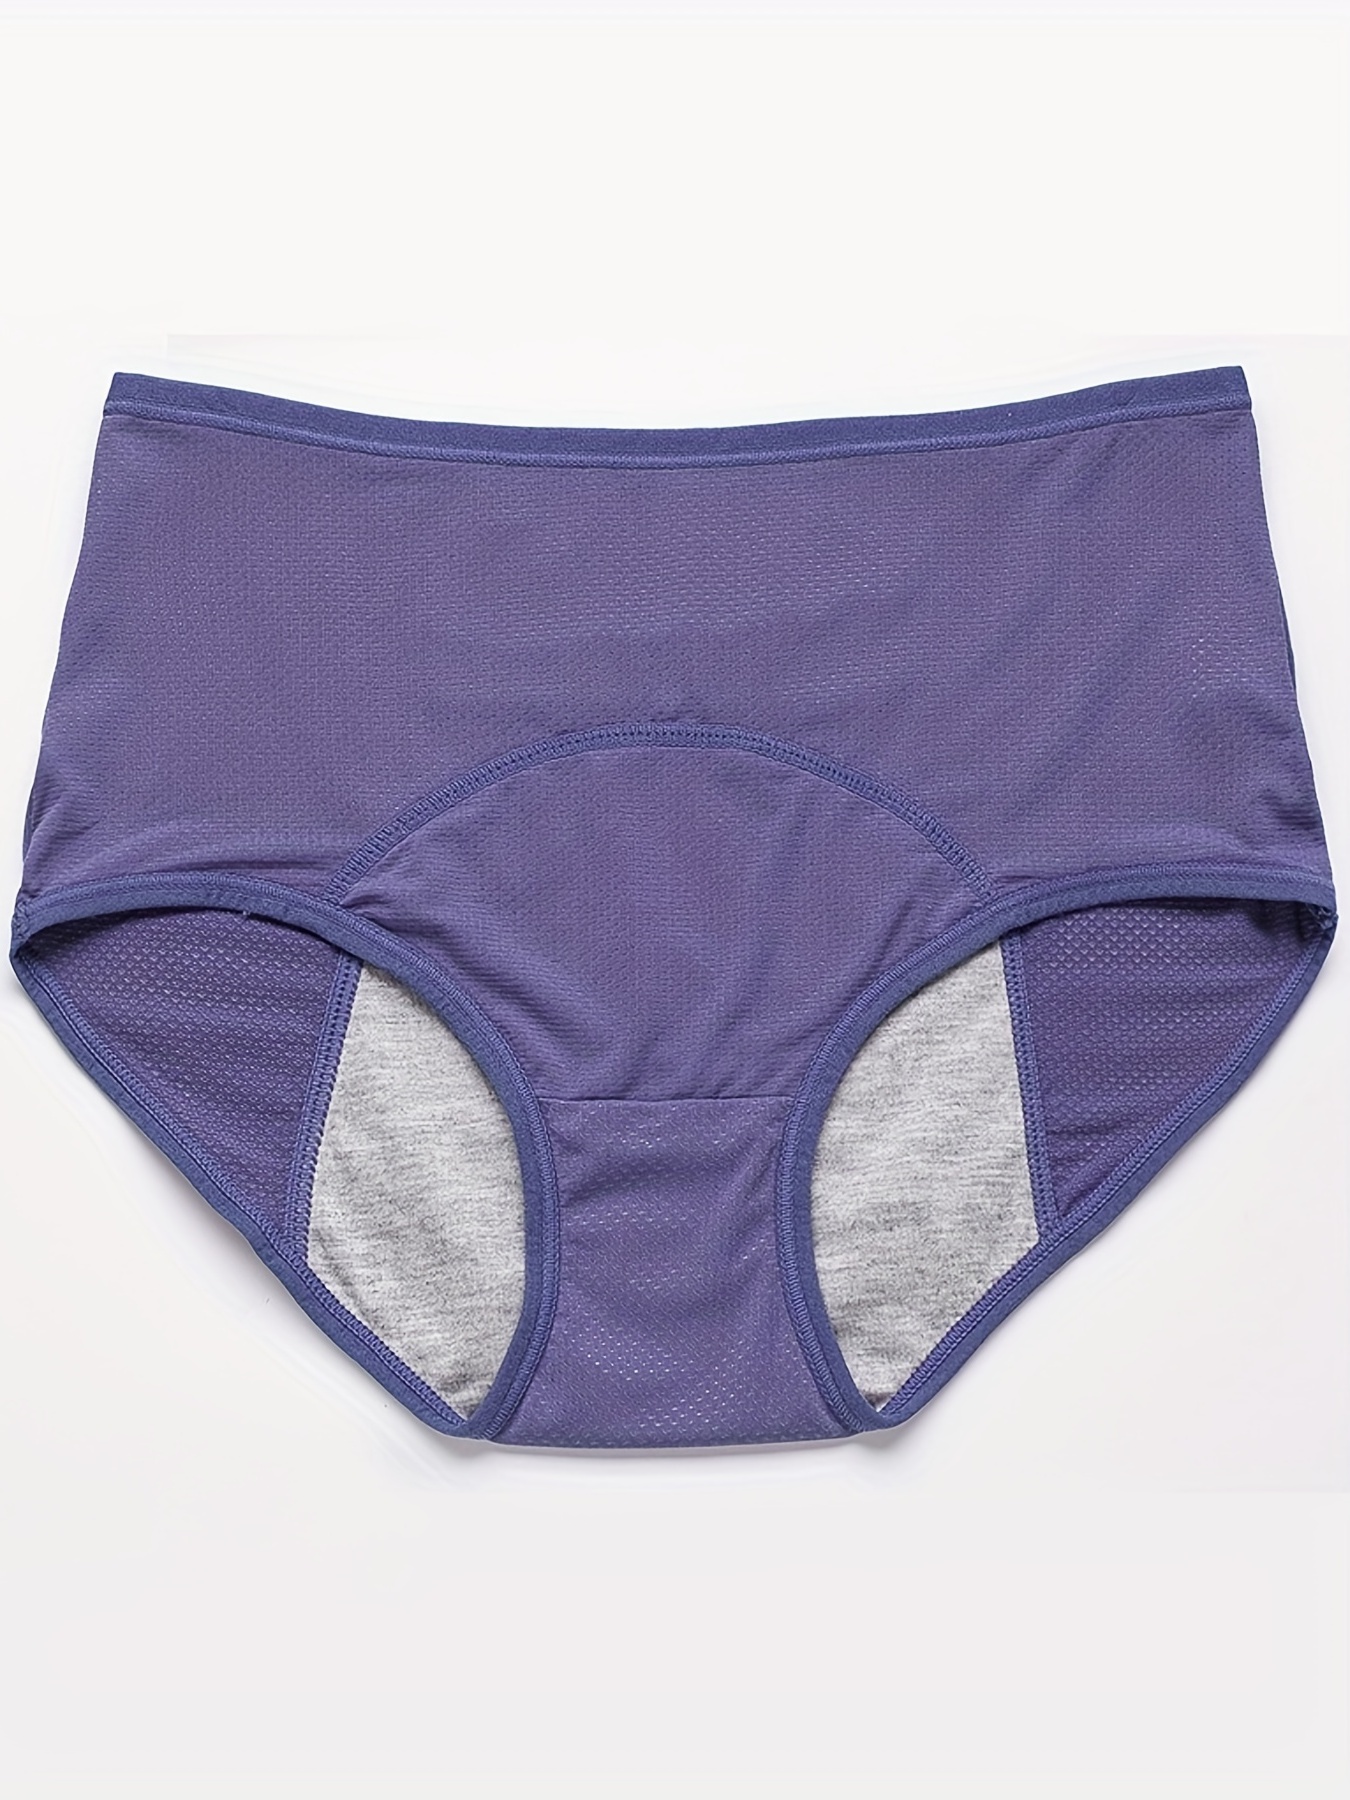 Leak Proof Menstrual Panties Women Underwear Period Cotton Pregnancy  Waterproof Briefs Plus Size Physiological Breathable Pants